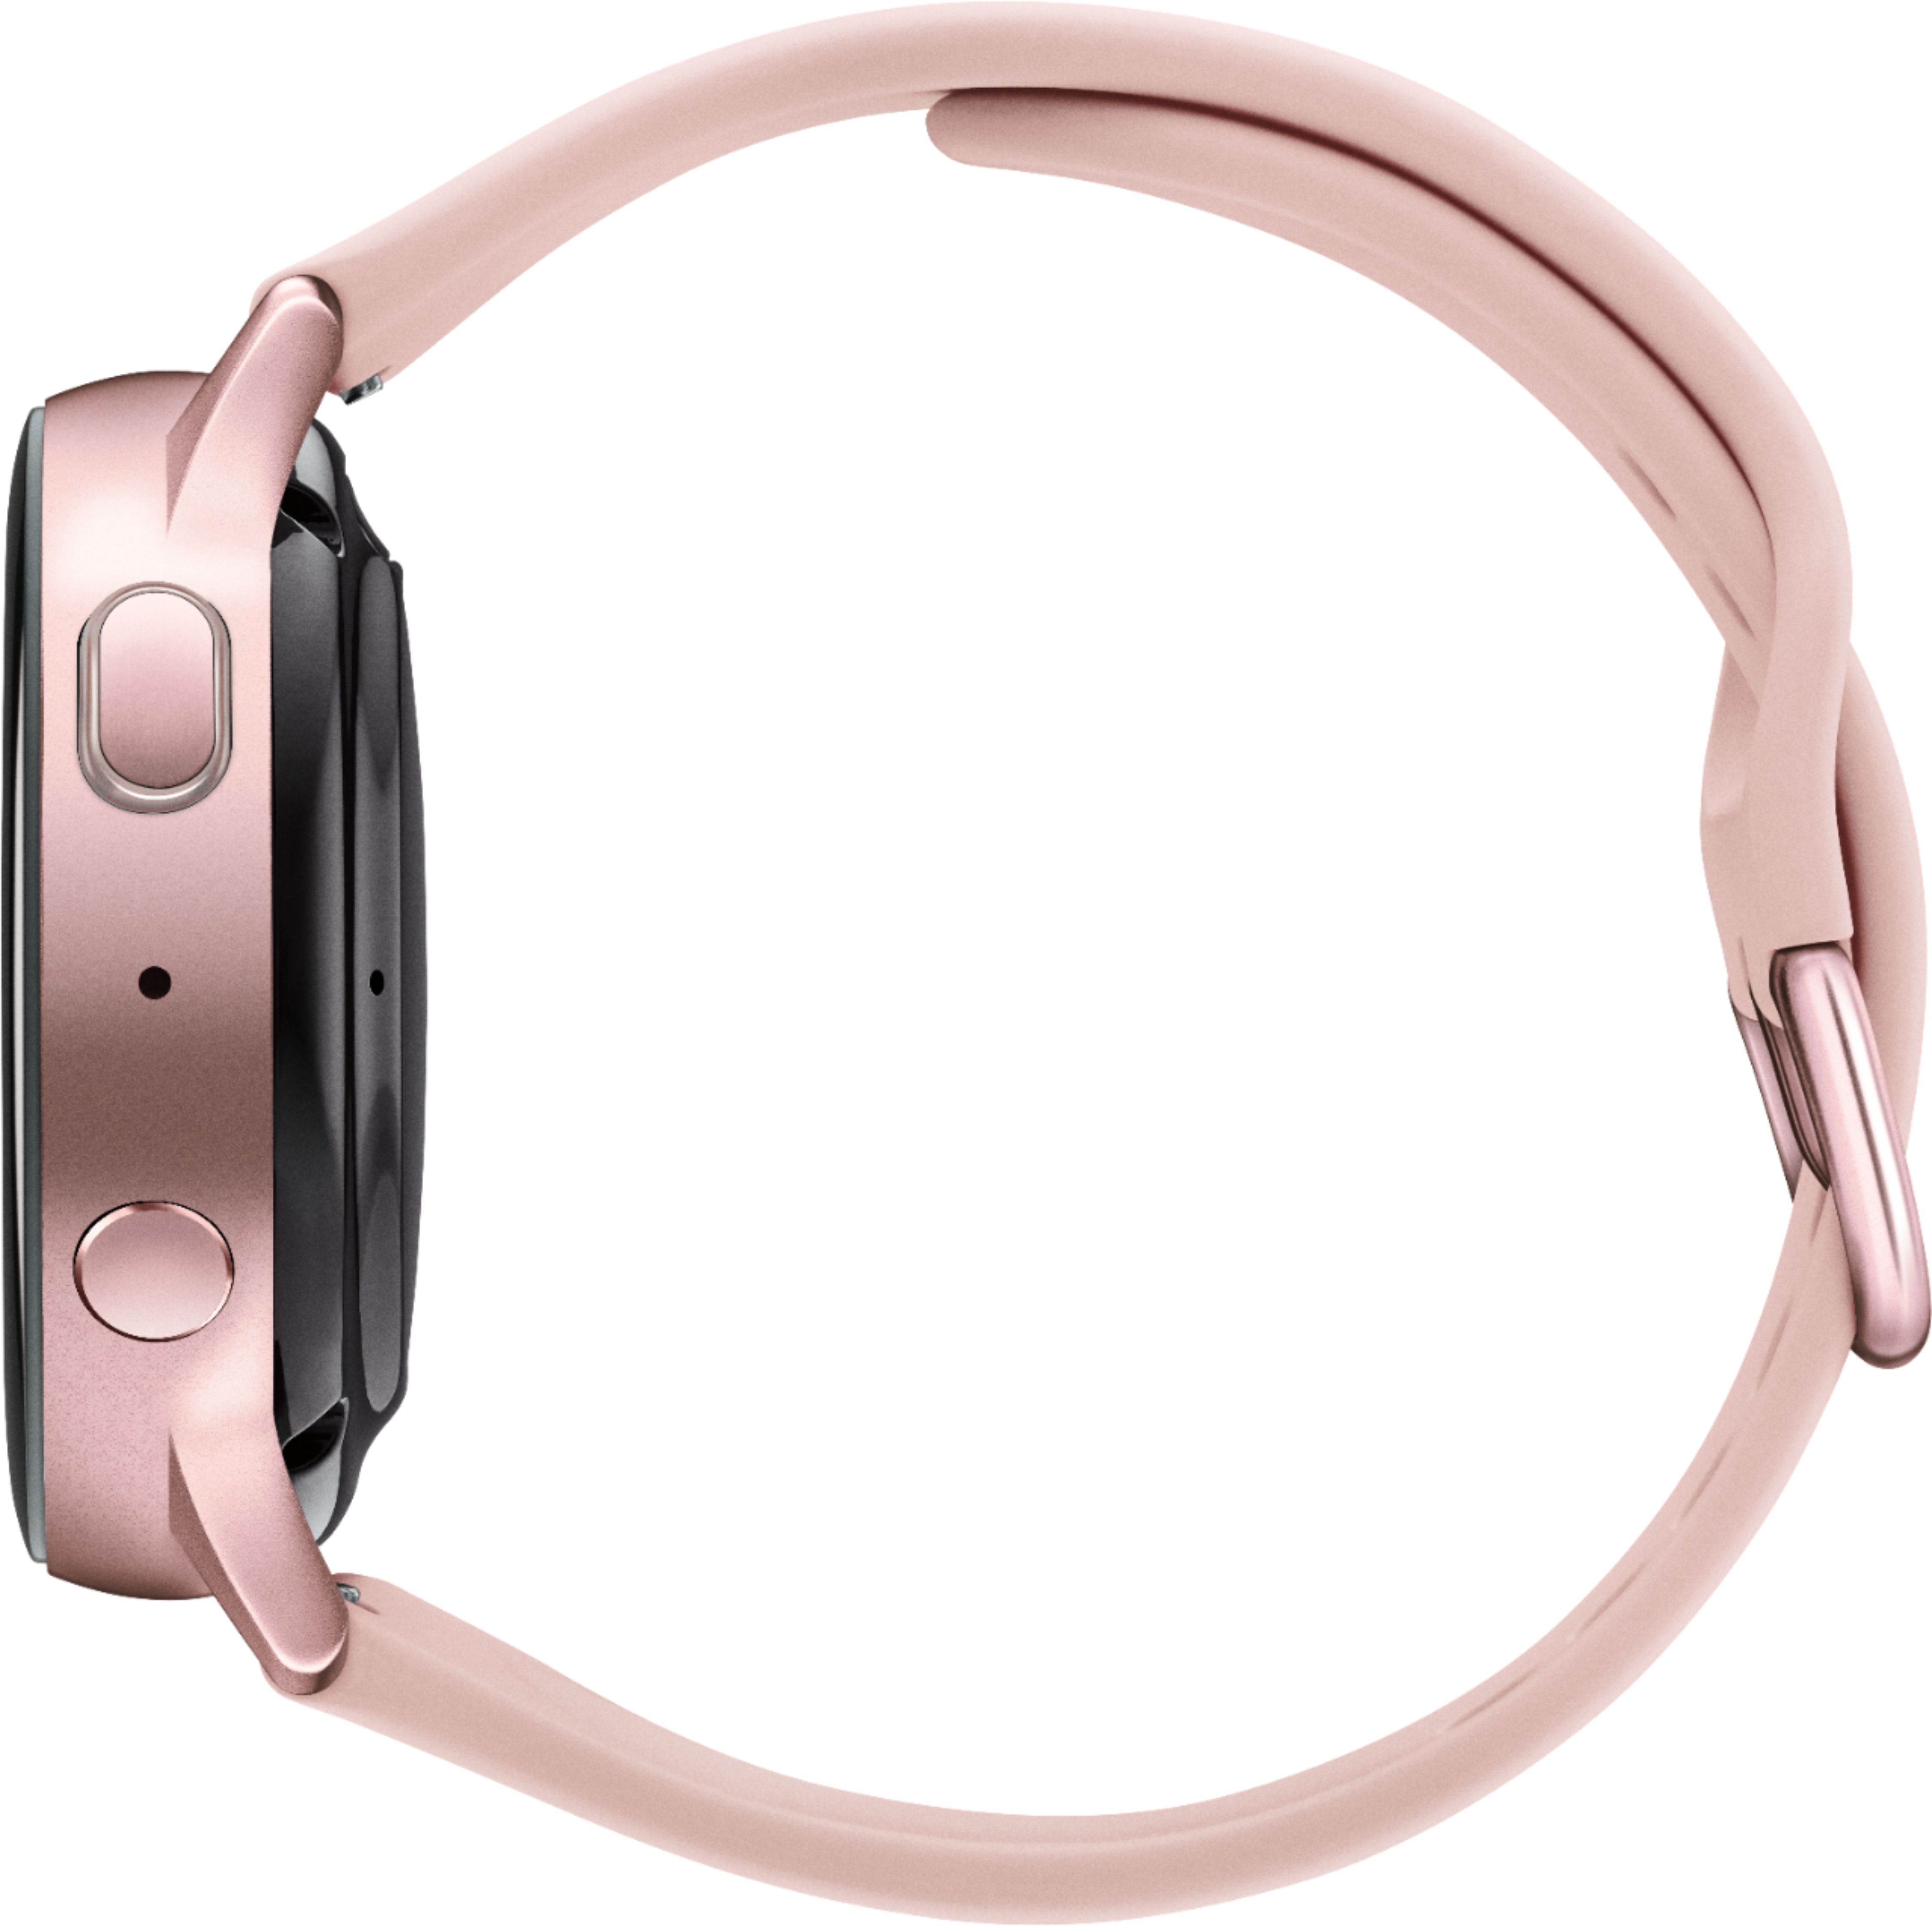 SAMSUNG Galaxy Watch Active 2 (40mm, GPS, Bluetooth) - Pink Gold  SM-R830NZDAXAR (Open Box) 